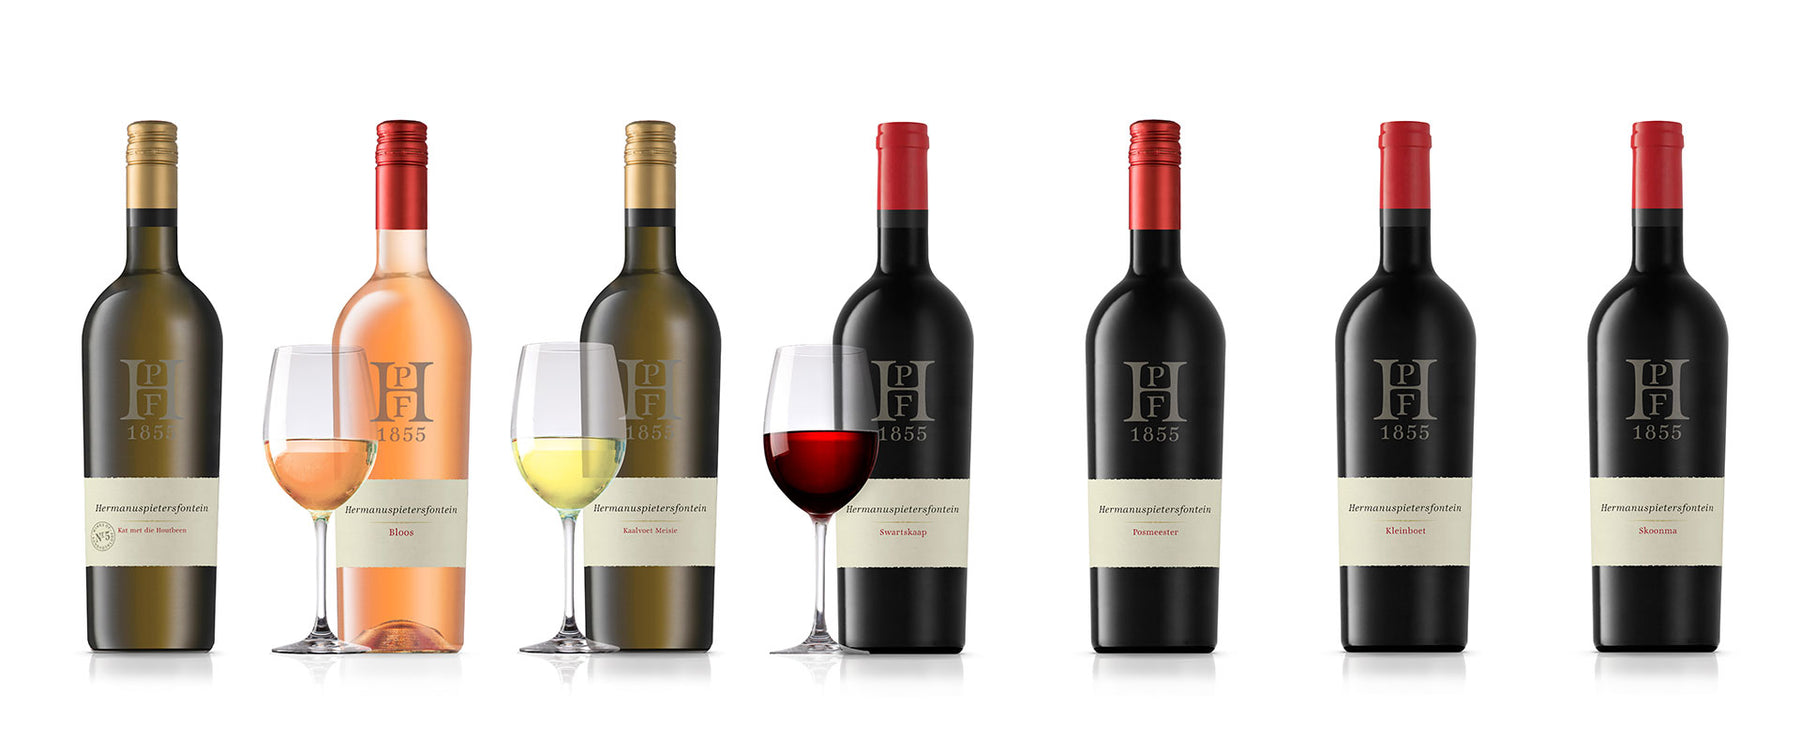 Hermanuspietersfontein Wines 